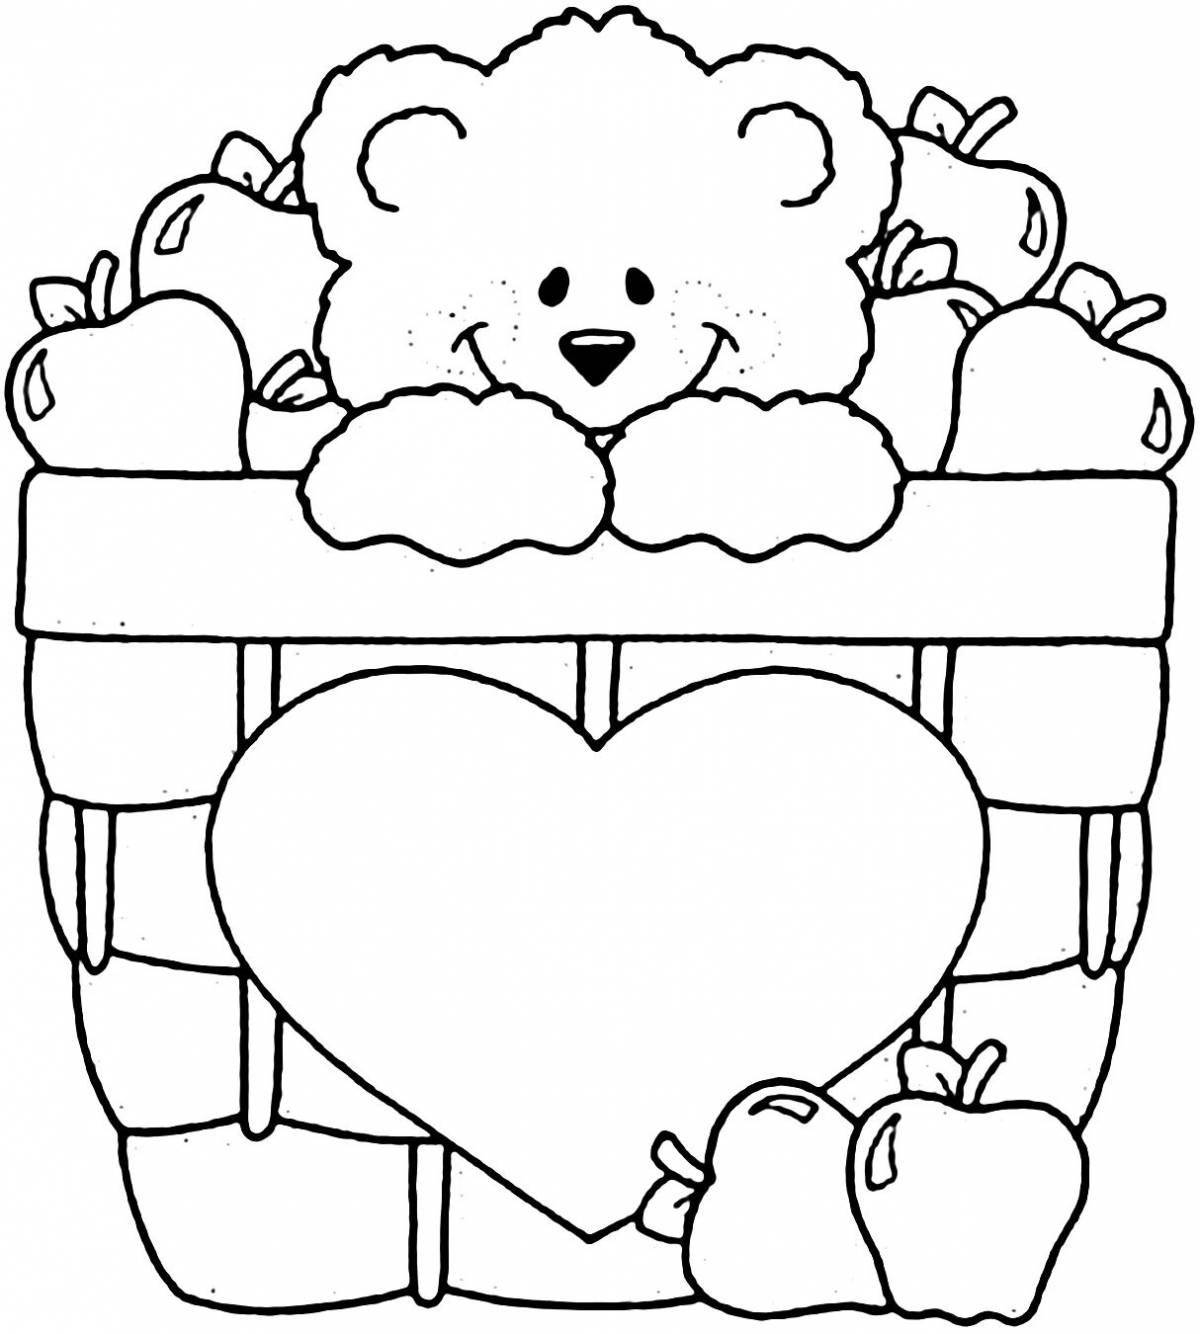 Joyful bear with a heart coloring book